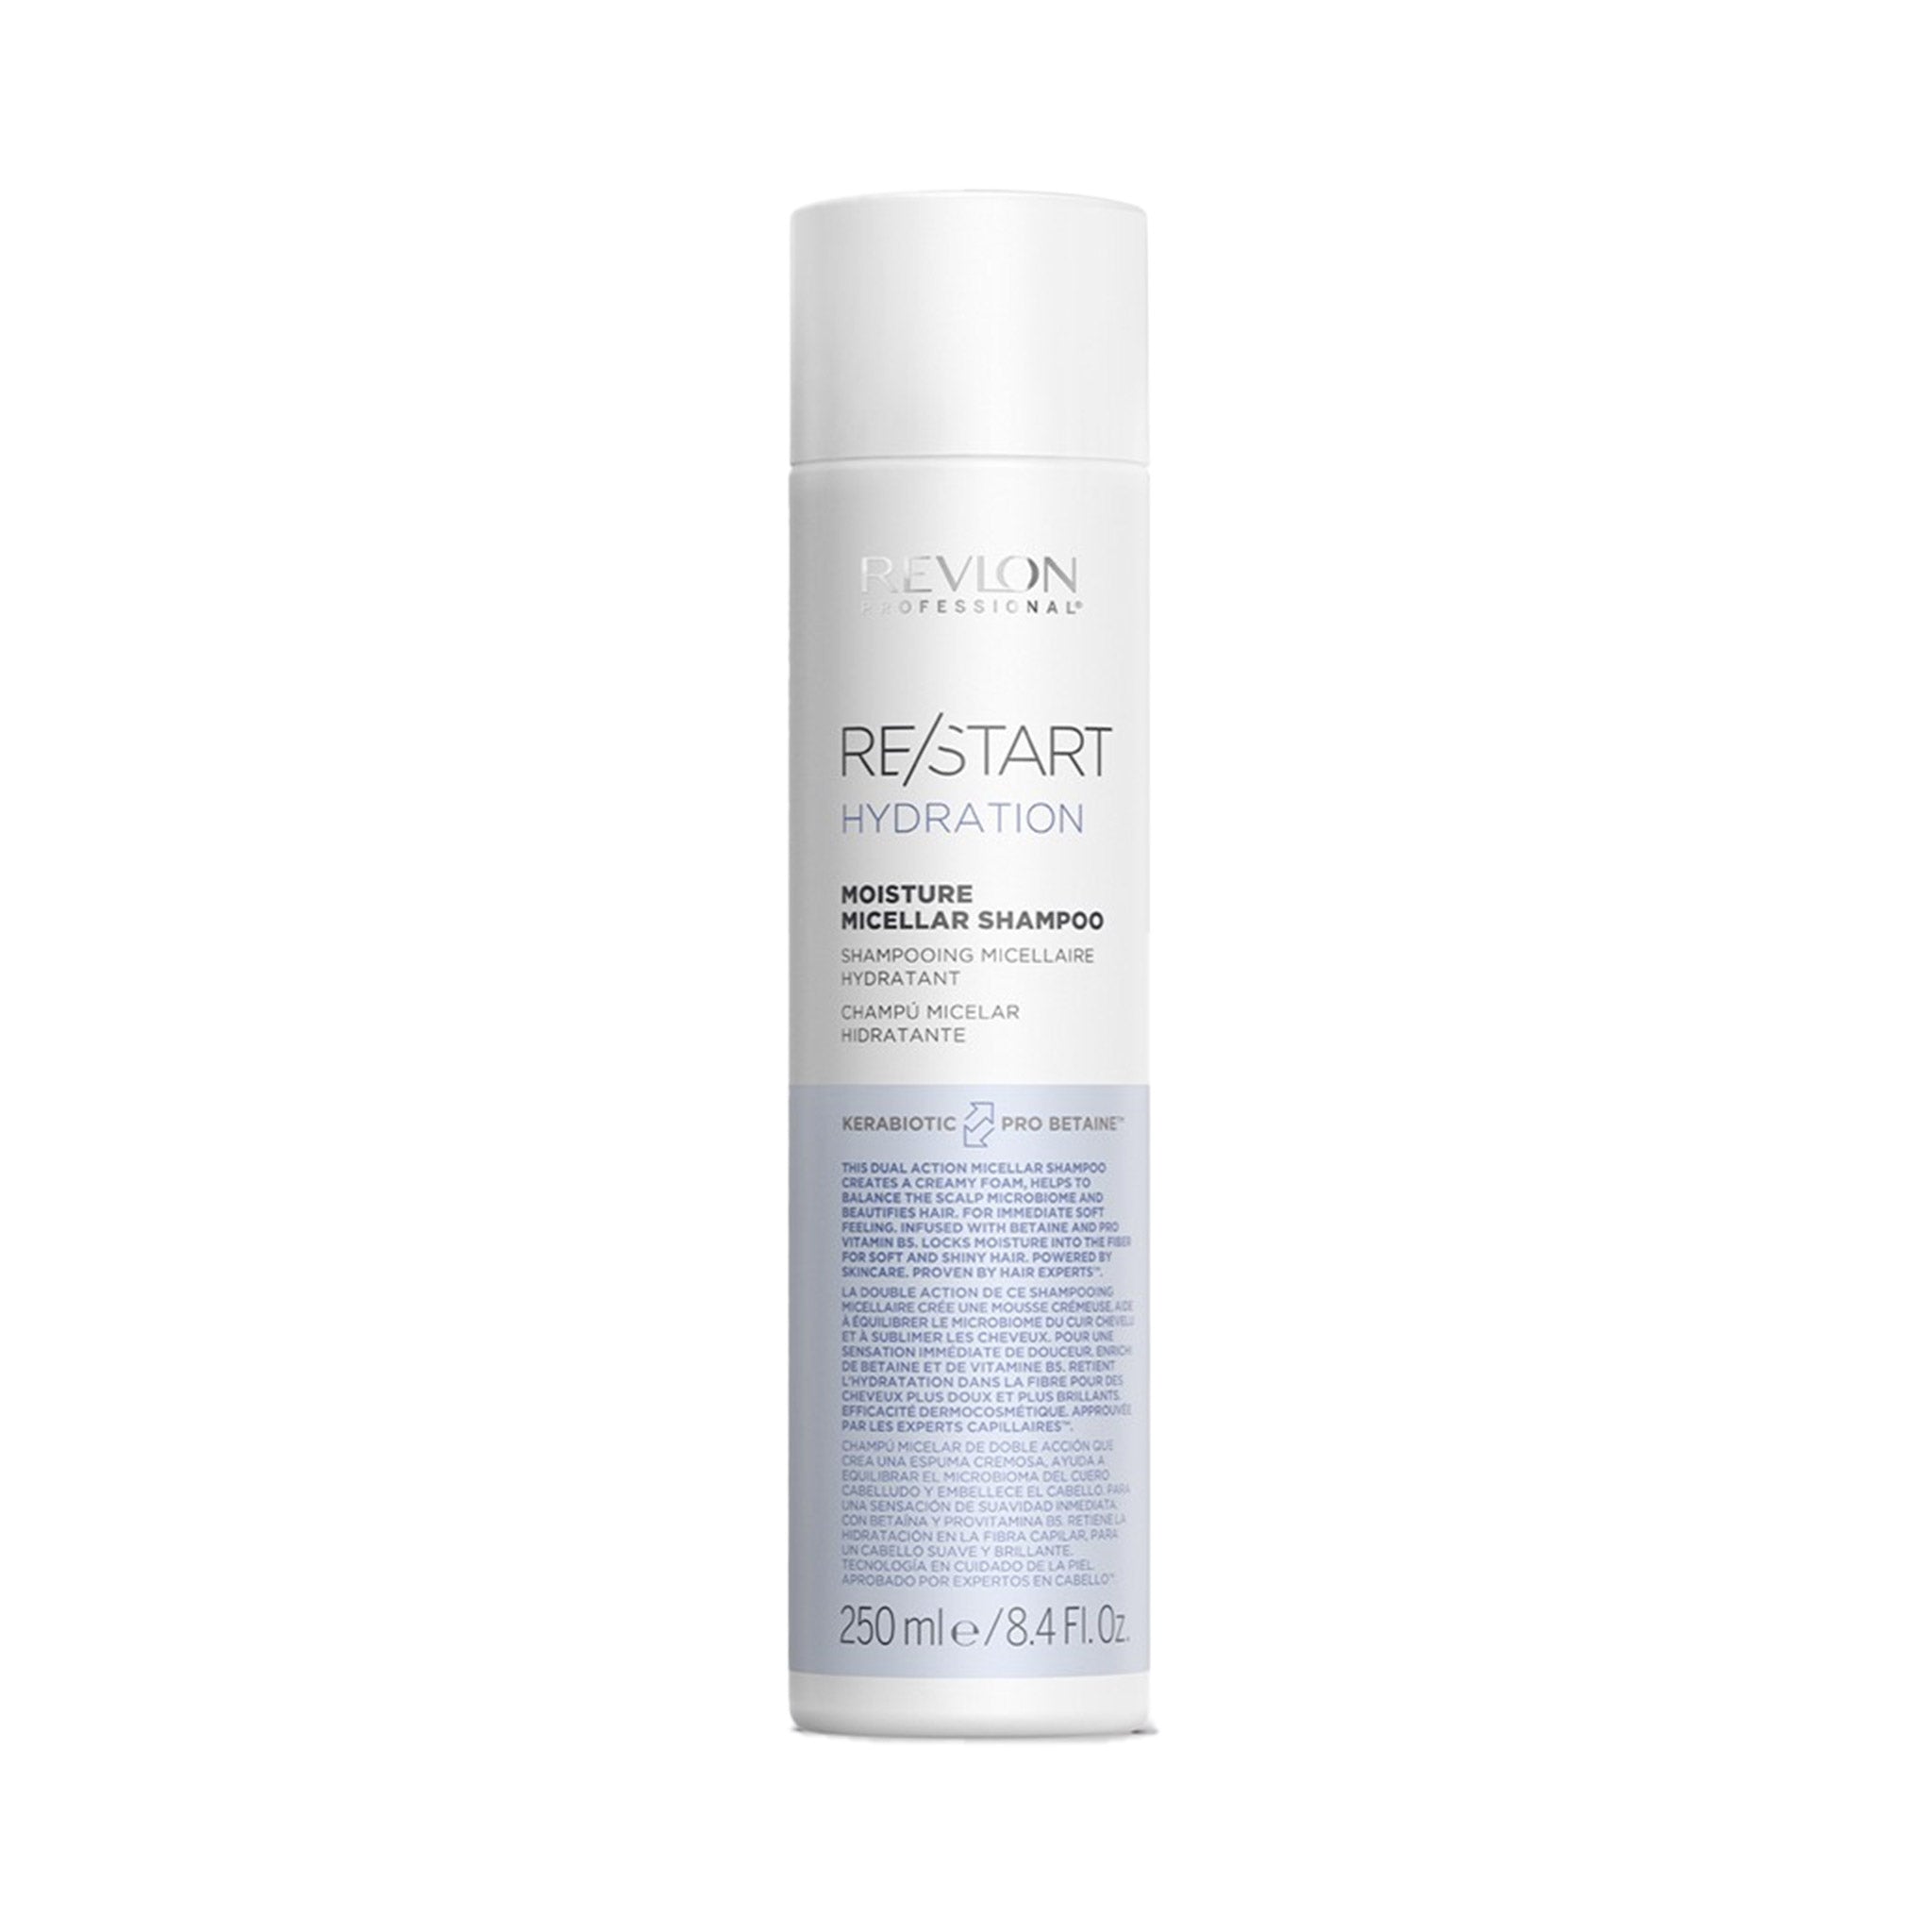 Re/start™ Hydration Moisture Micellar Shampoo